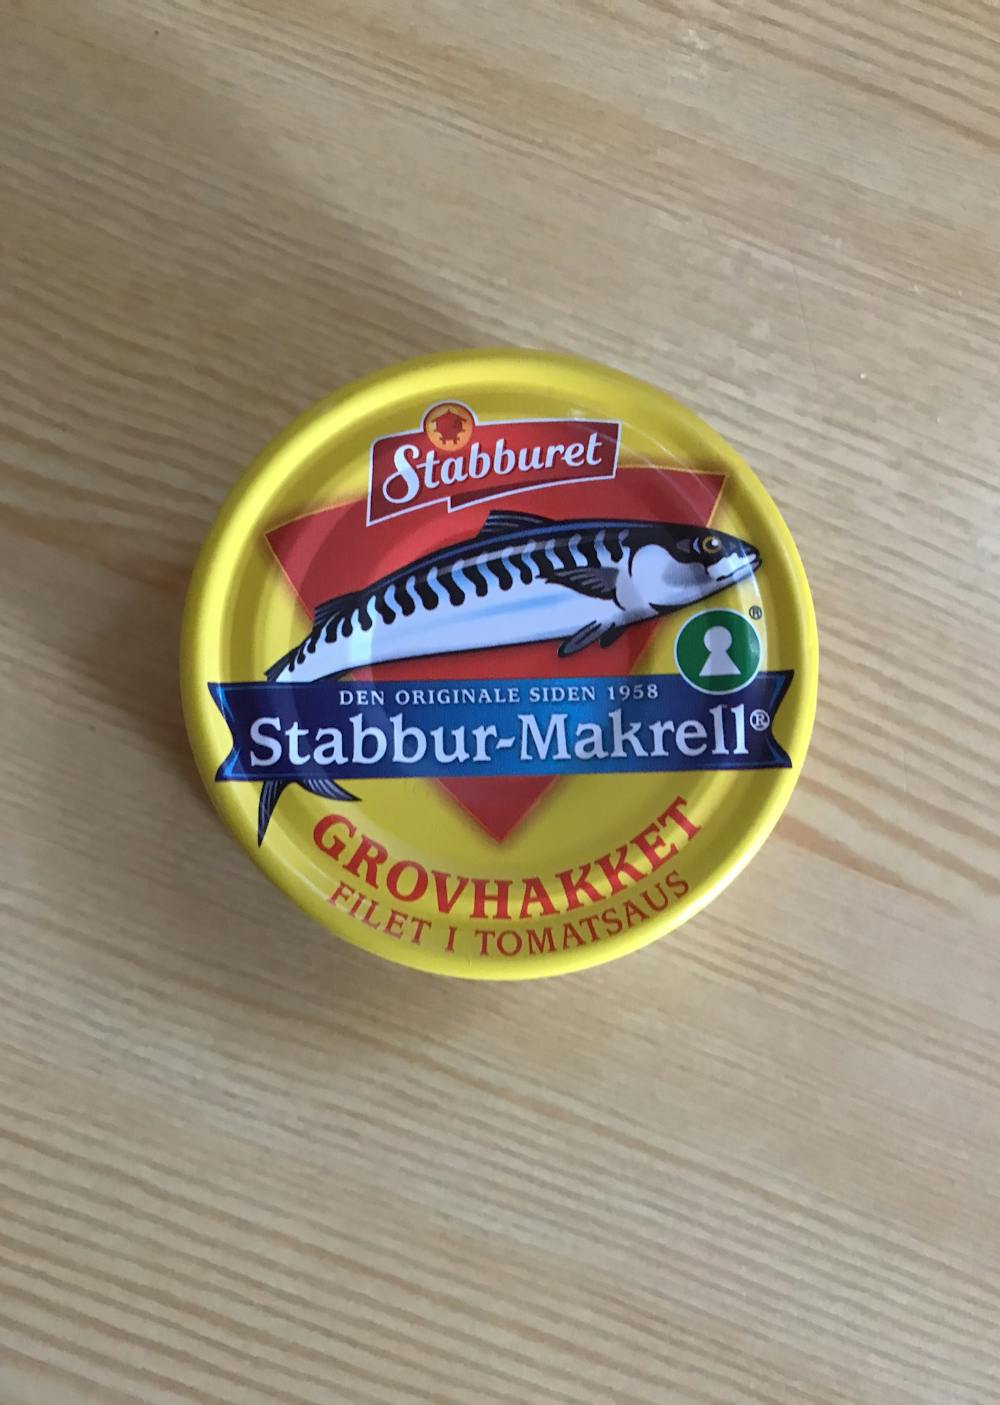 Stabbur-makrell, filet i tomatsaus, Stabburet